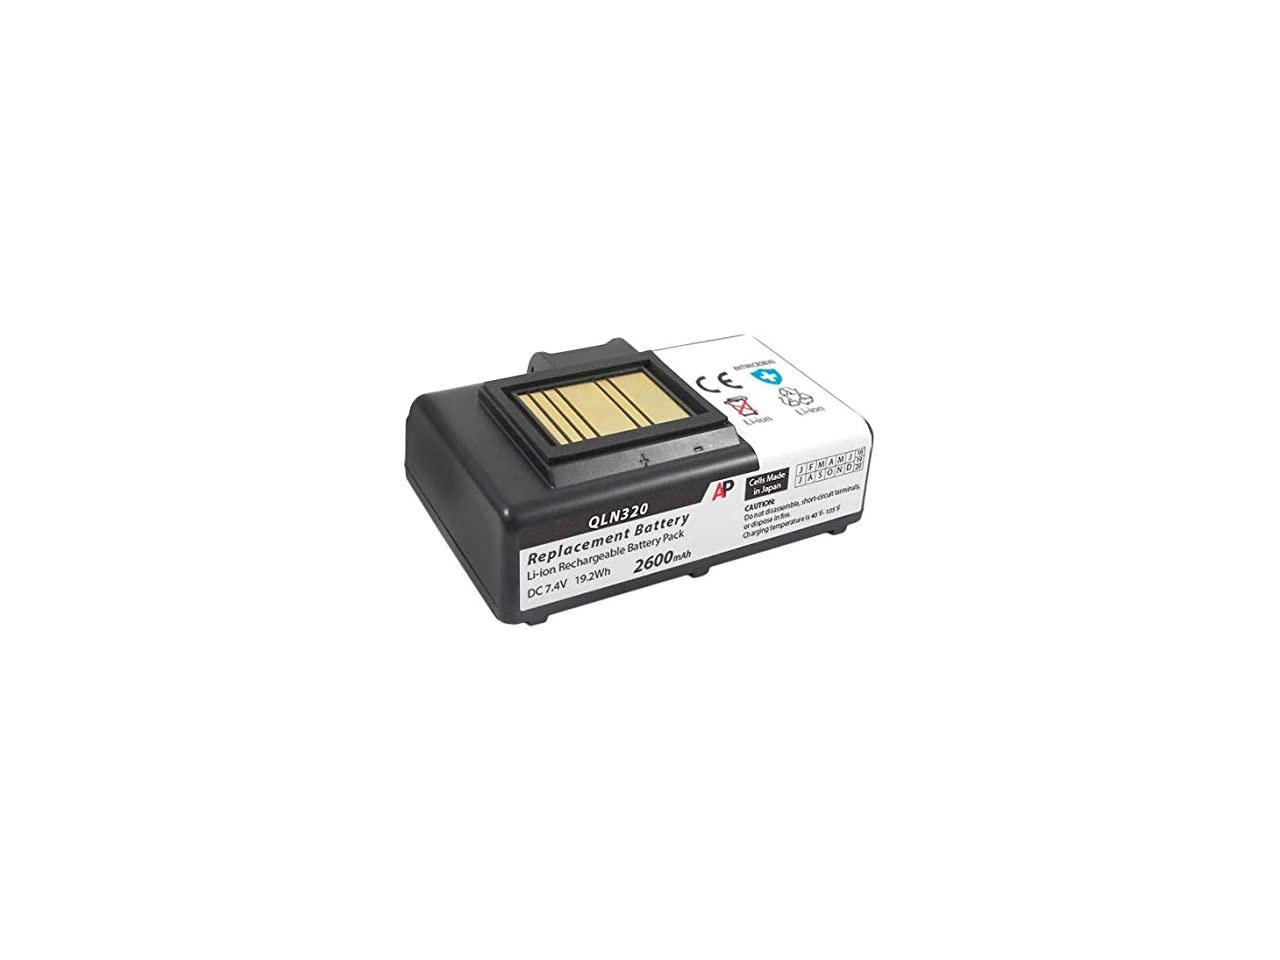 Zebra Qln320 Hc Qln220 Hc Zq520 And Zq510 Printers Replacement Battery 2600 Mah 1061